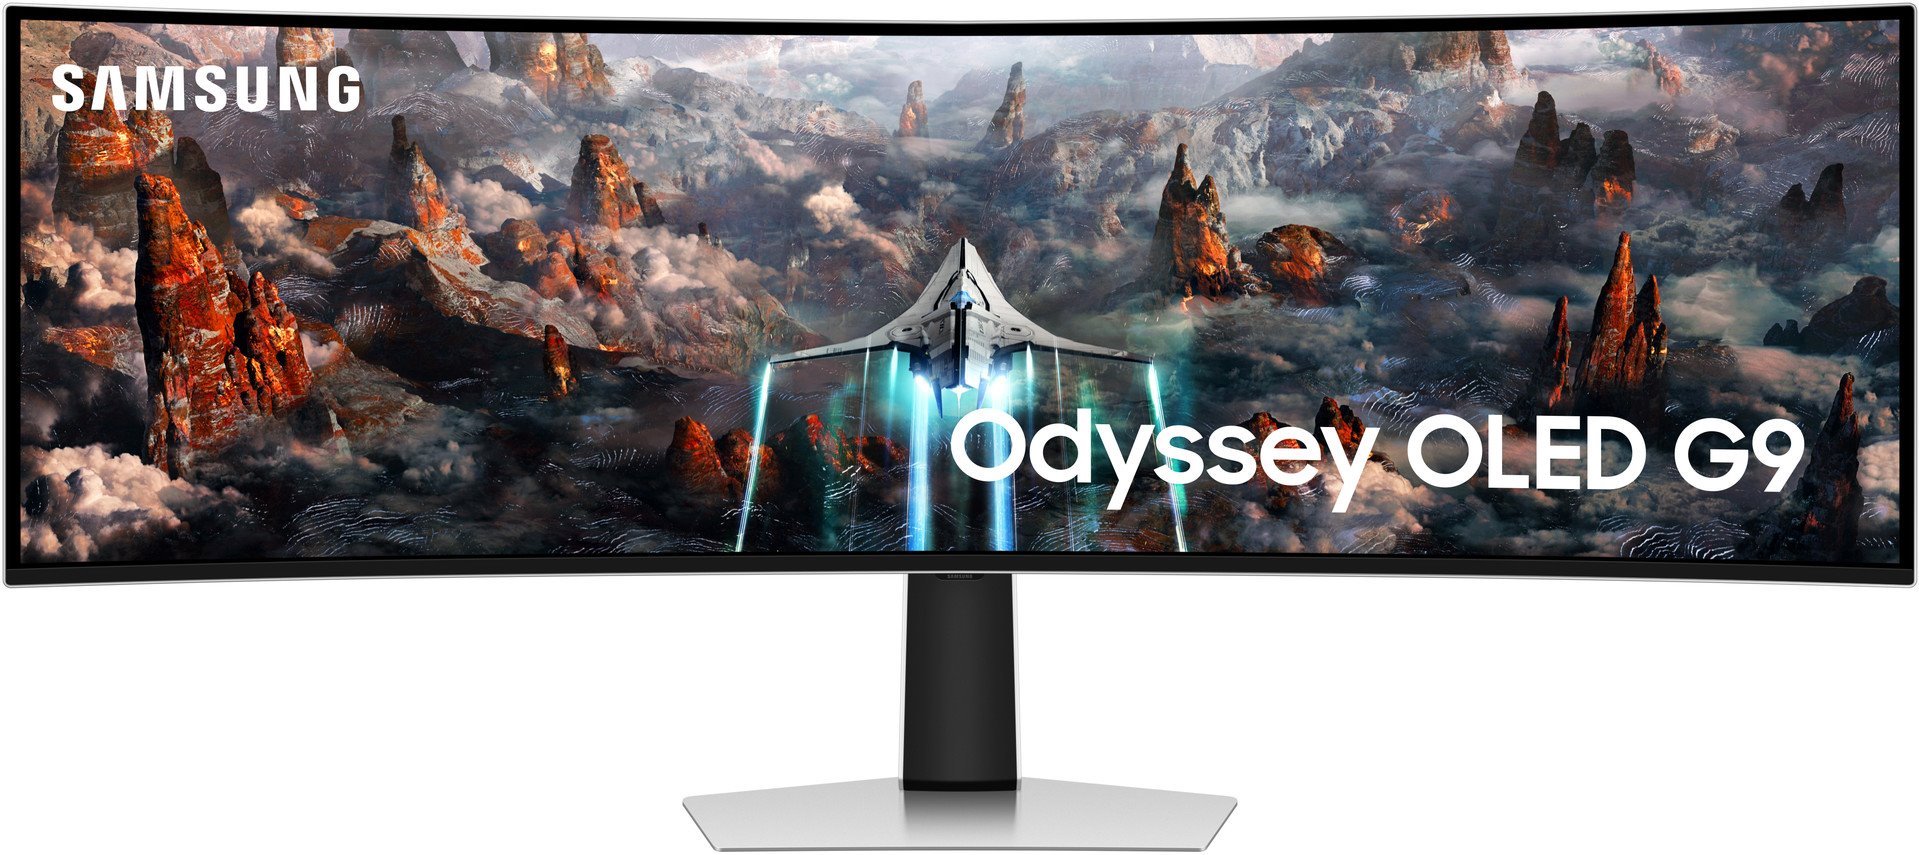 49 Odyssey OLED G9 Smart